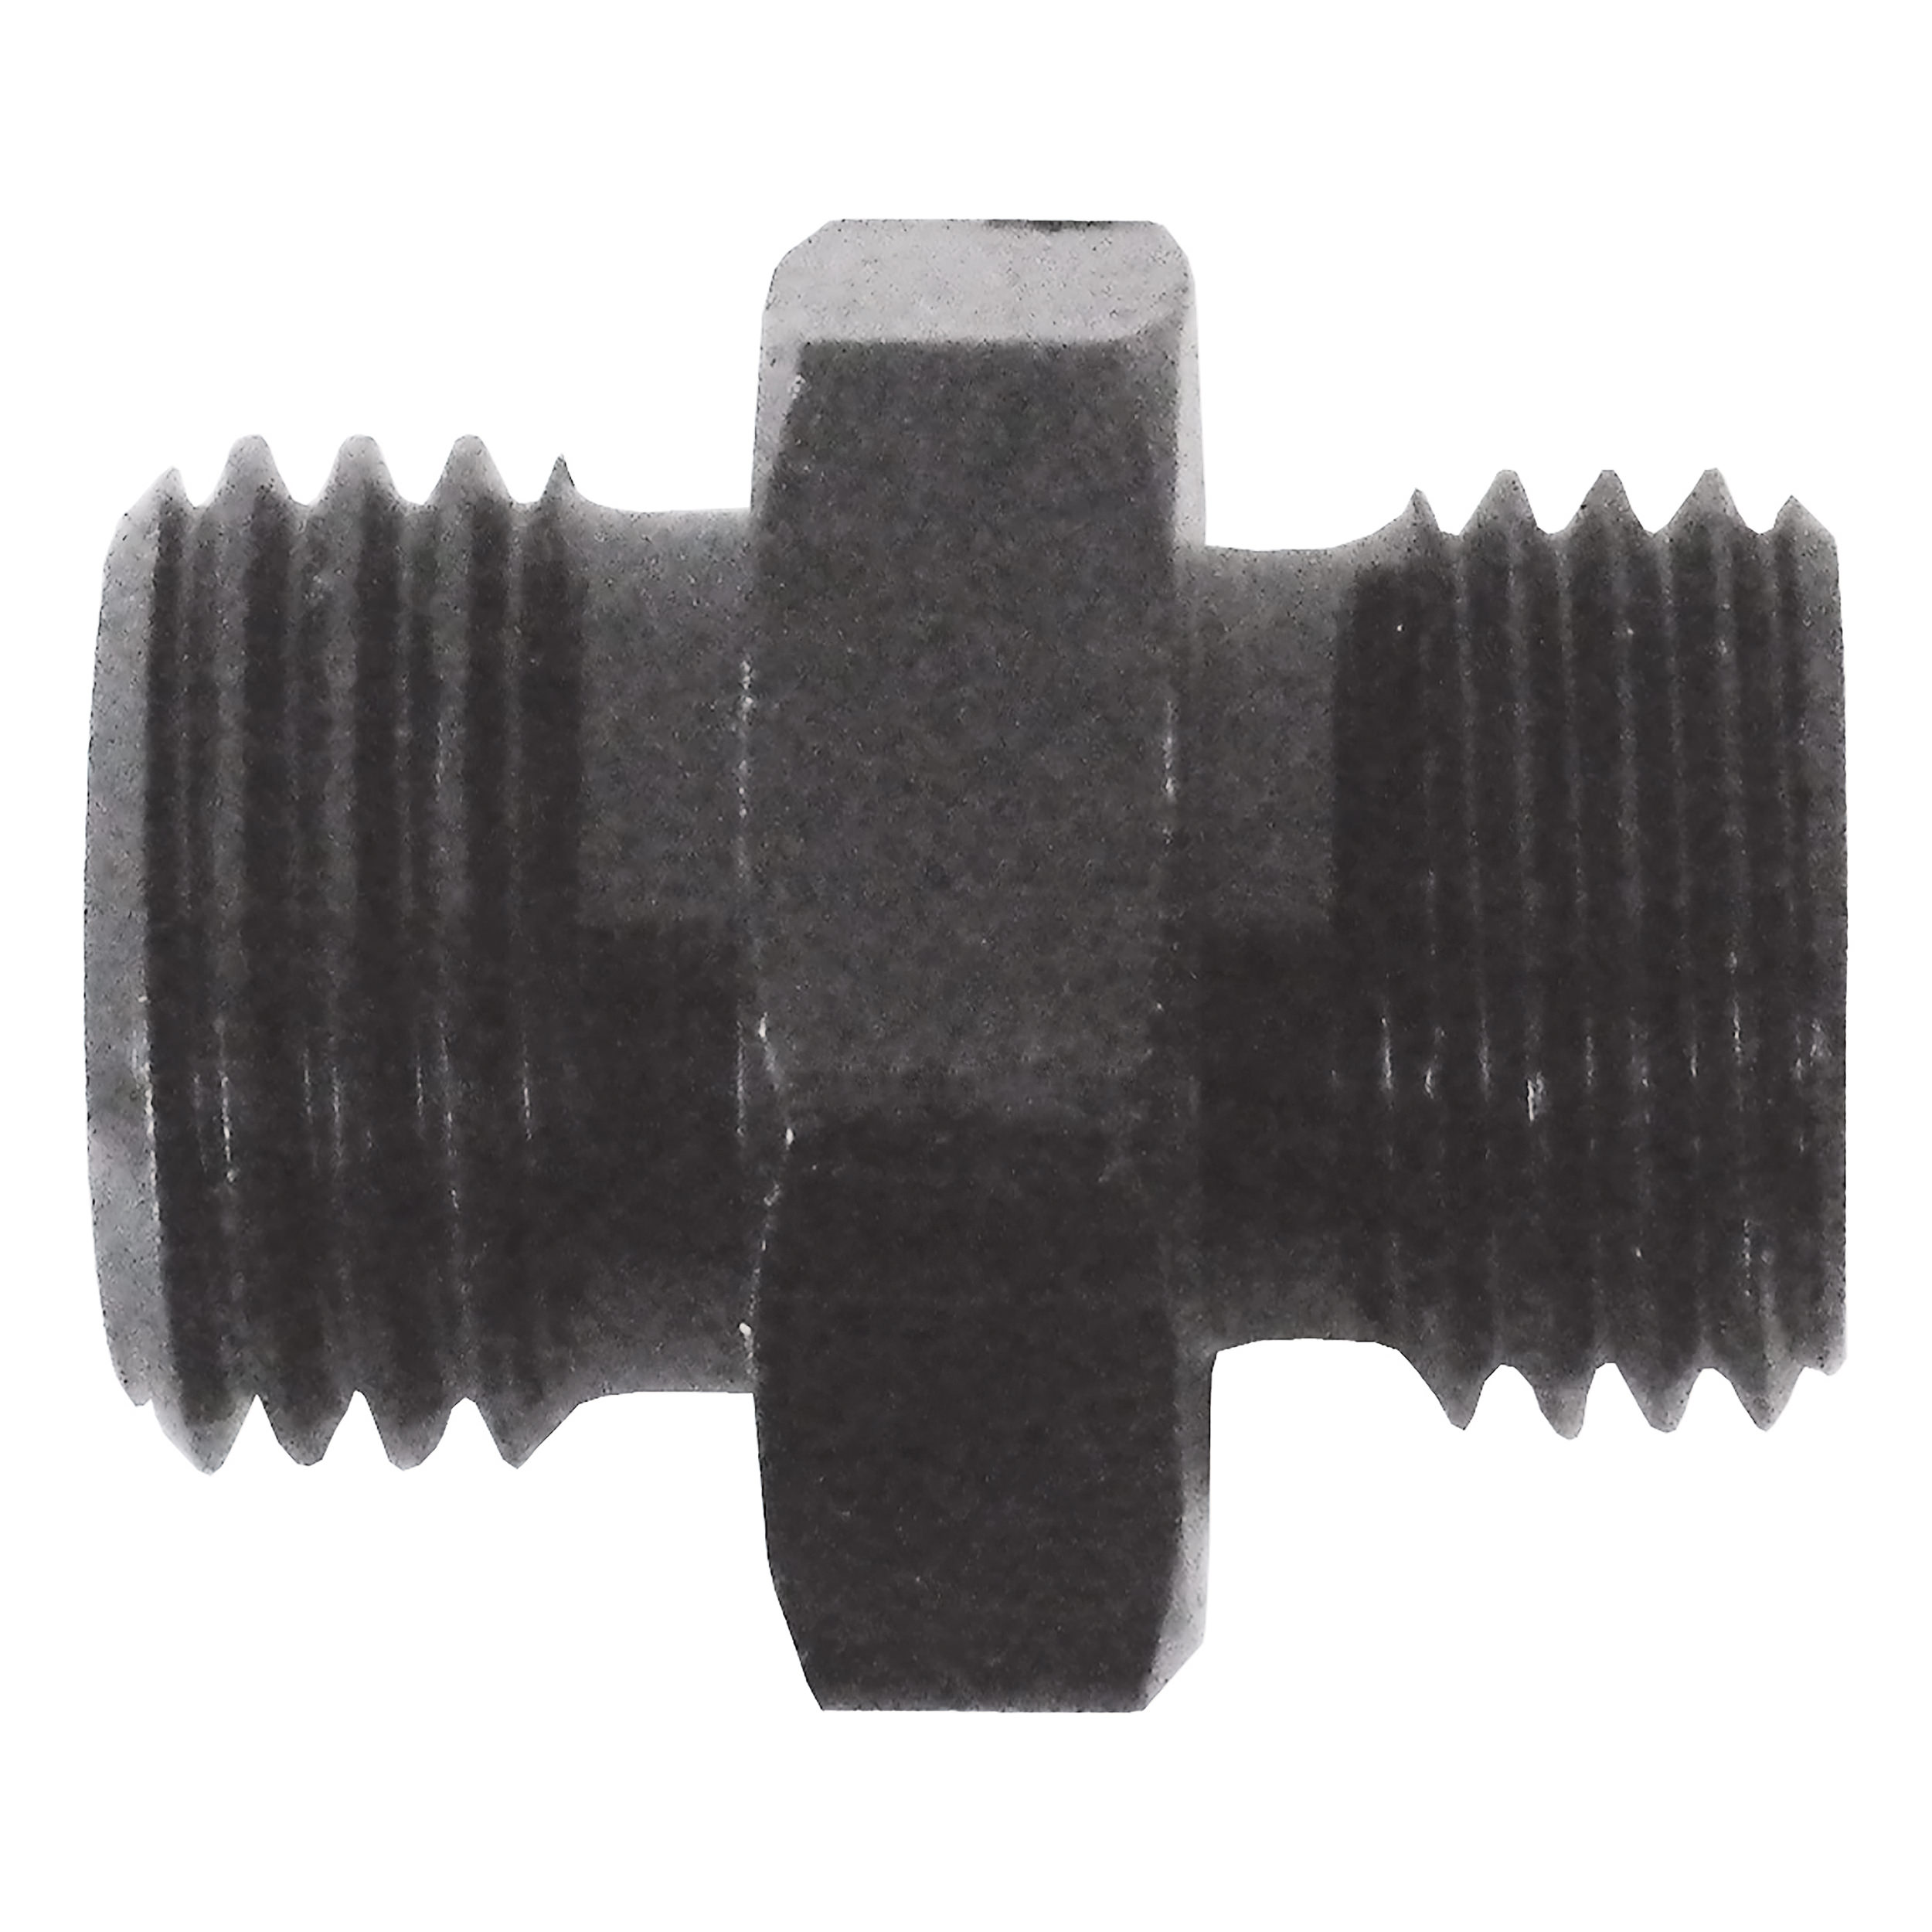 Double-nippel G¼ male × M12 × 1.25, aluminum, black anodised